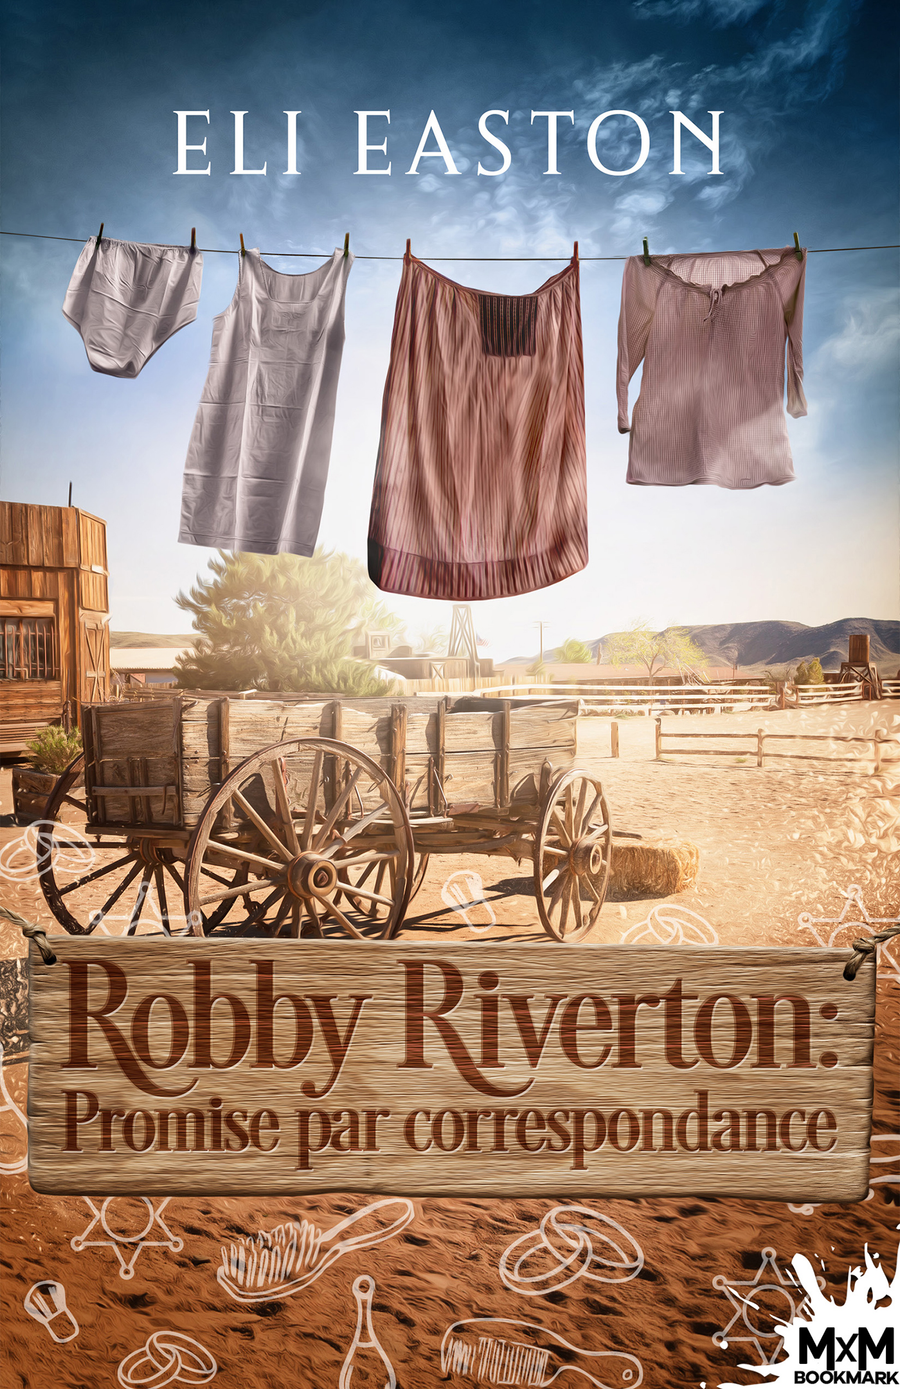 Robby Riverton : promise par correspondance